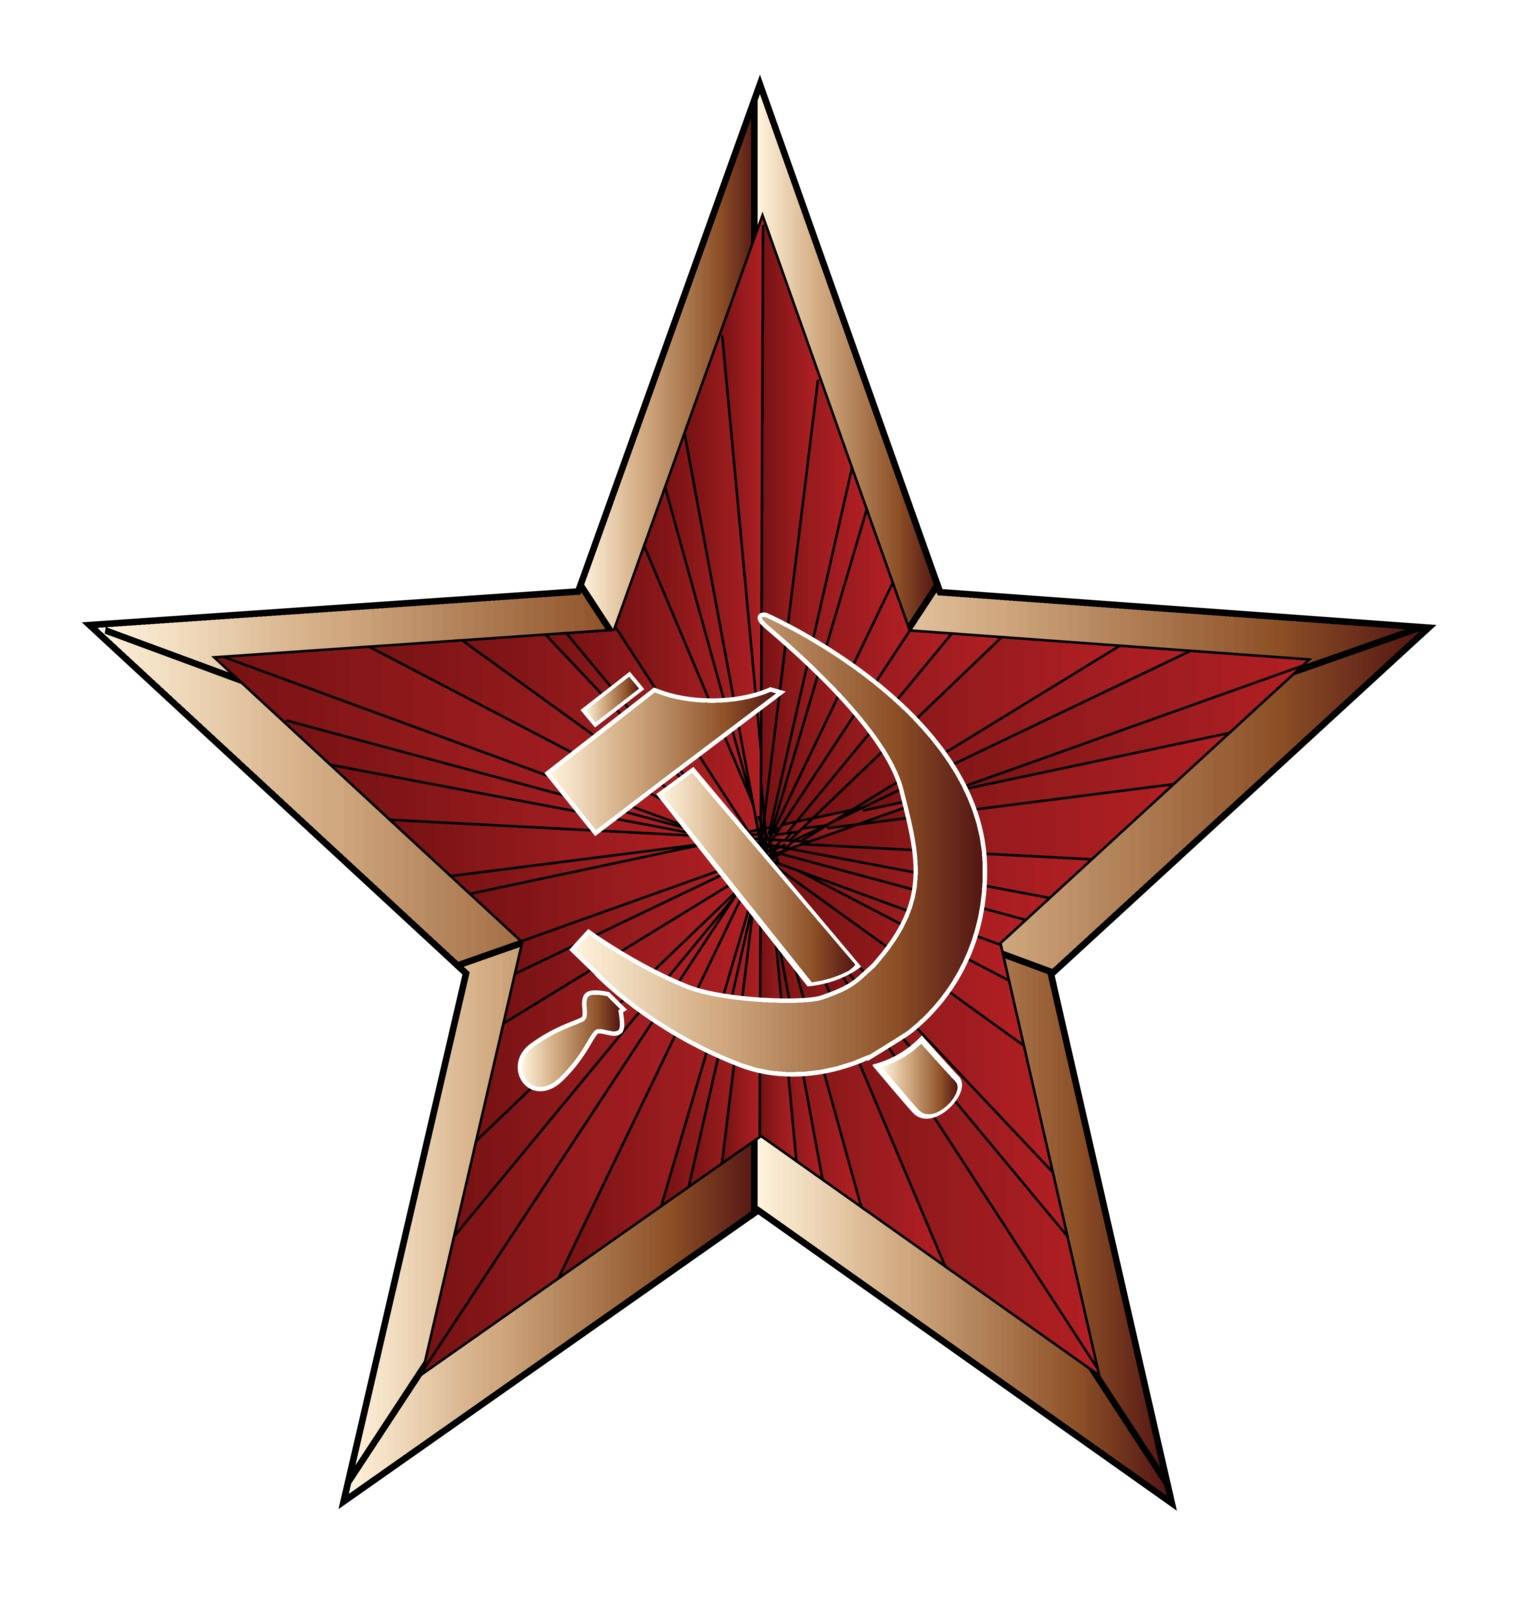 Soviet Officer Metal Cap Insignia by Bigalbaloo